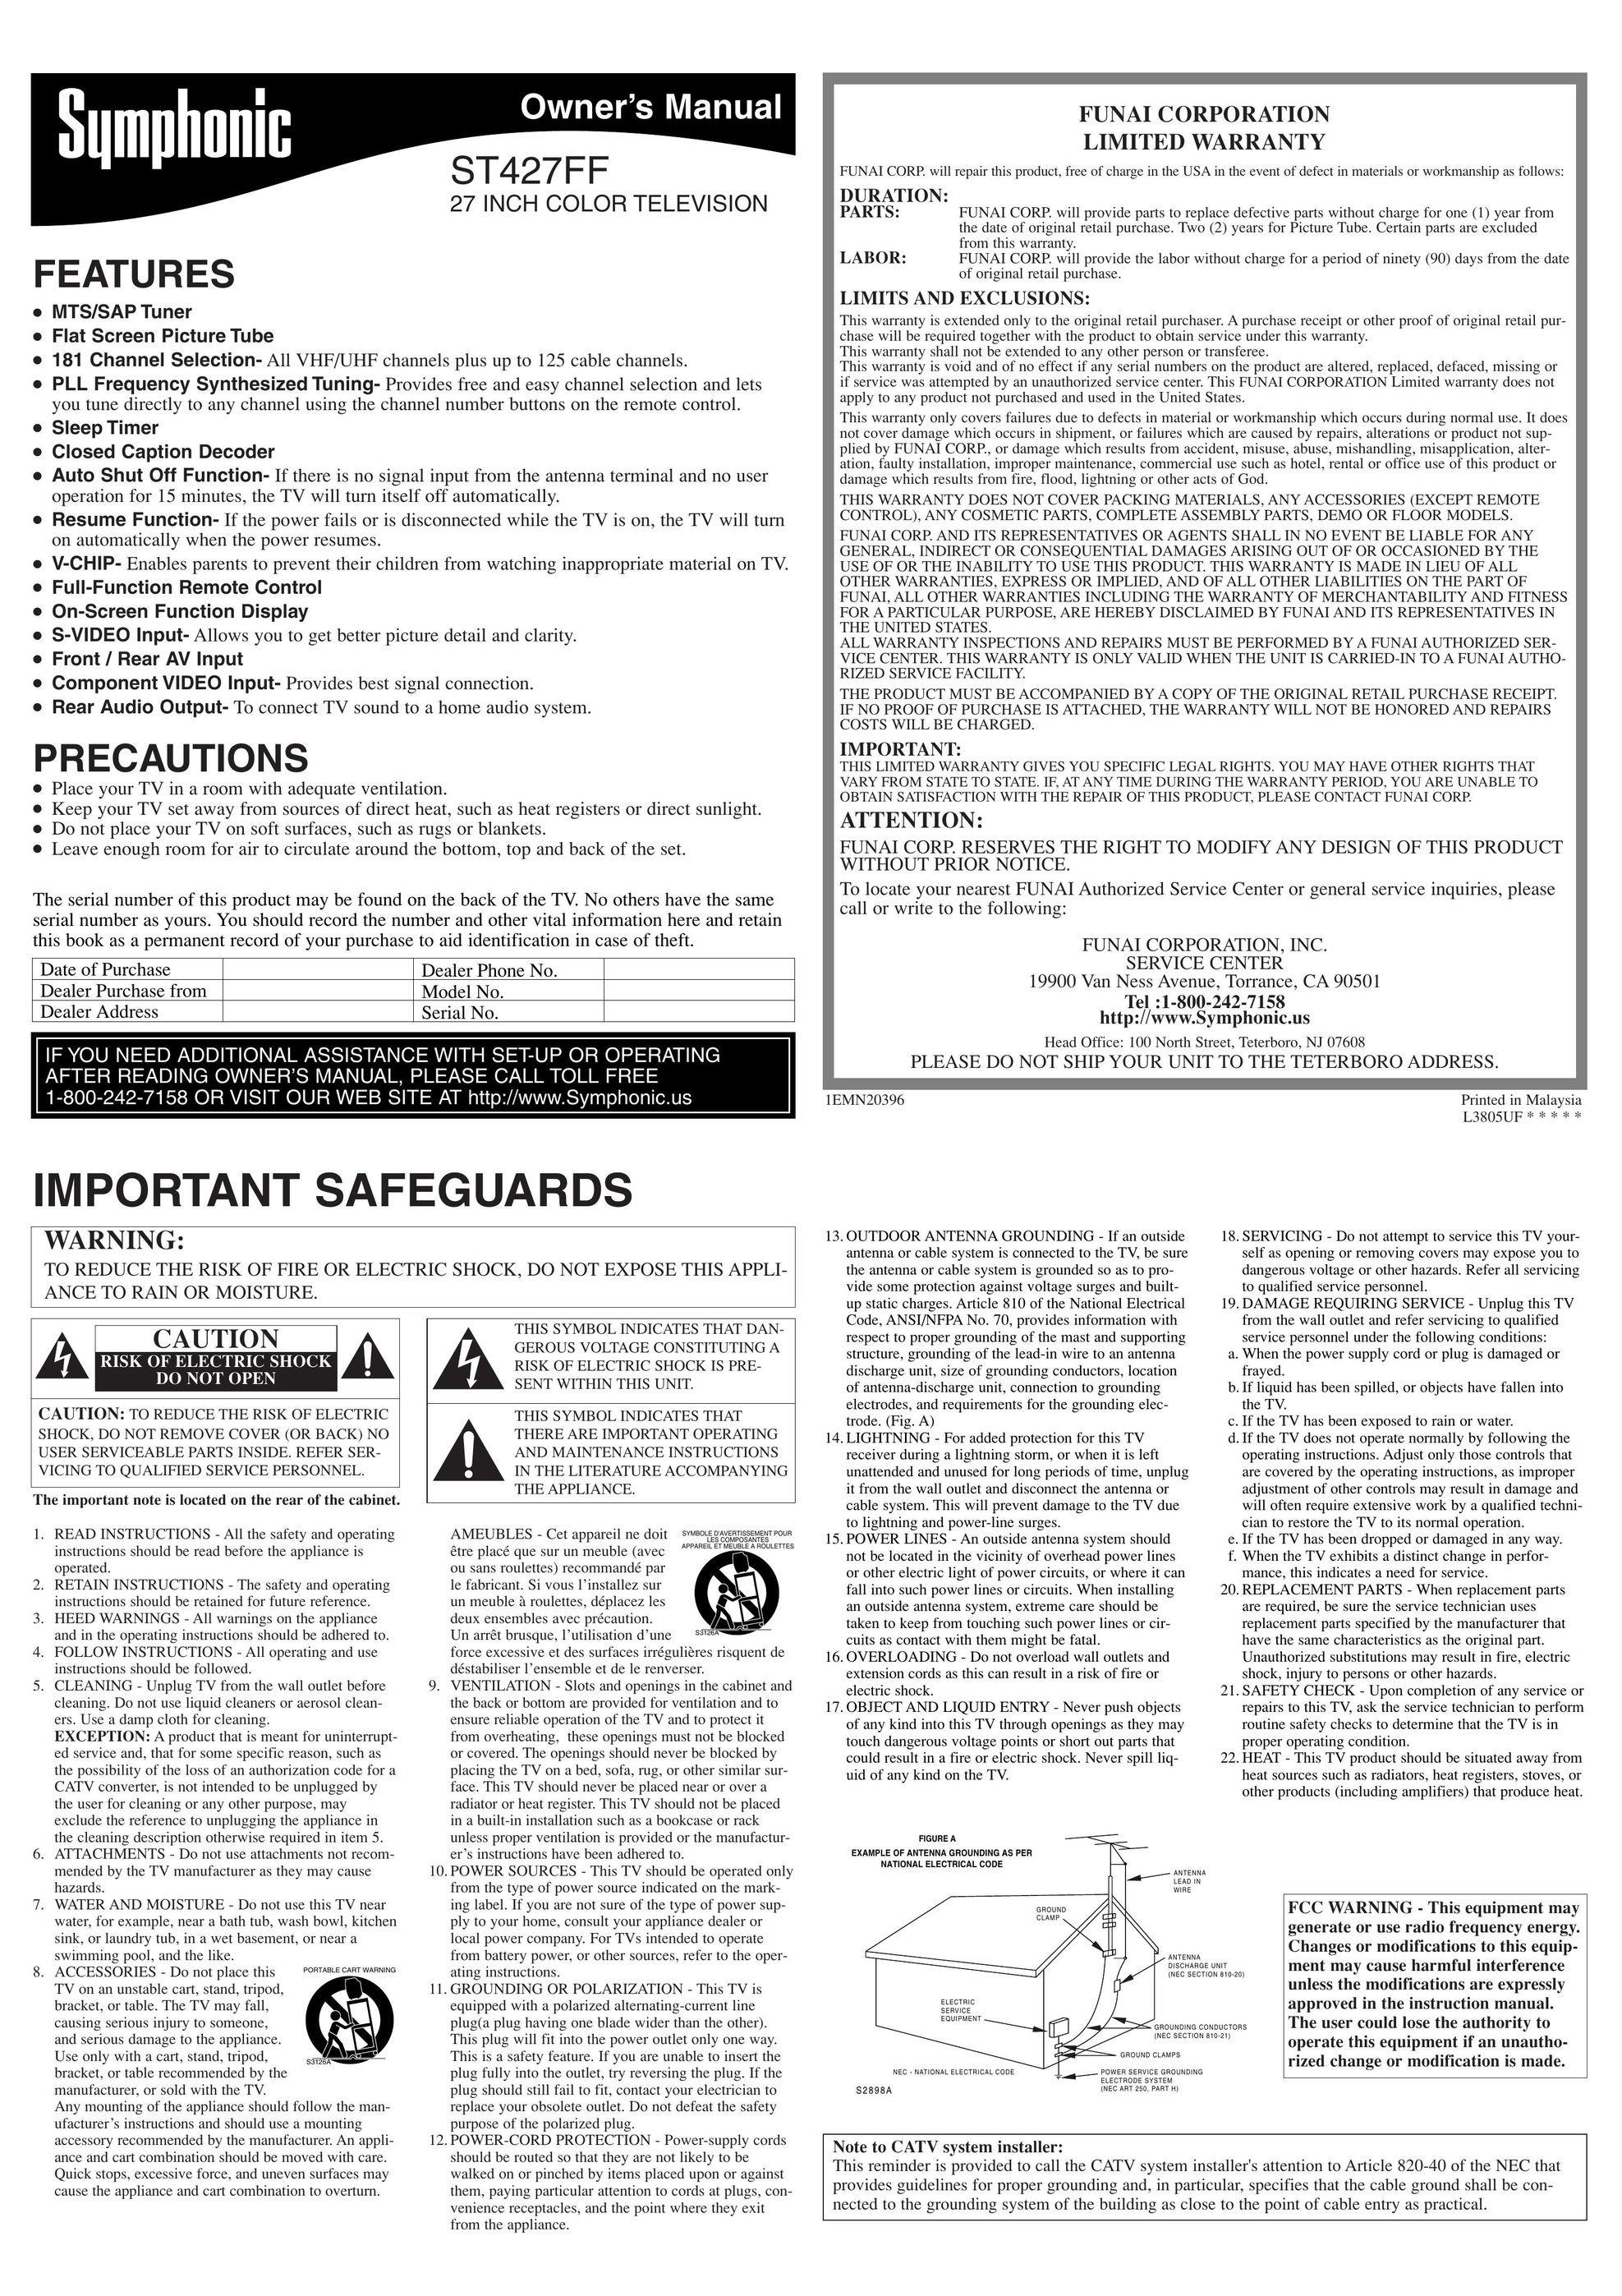 Symphonic ST427FF CRT Television User Manual